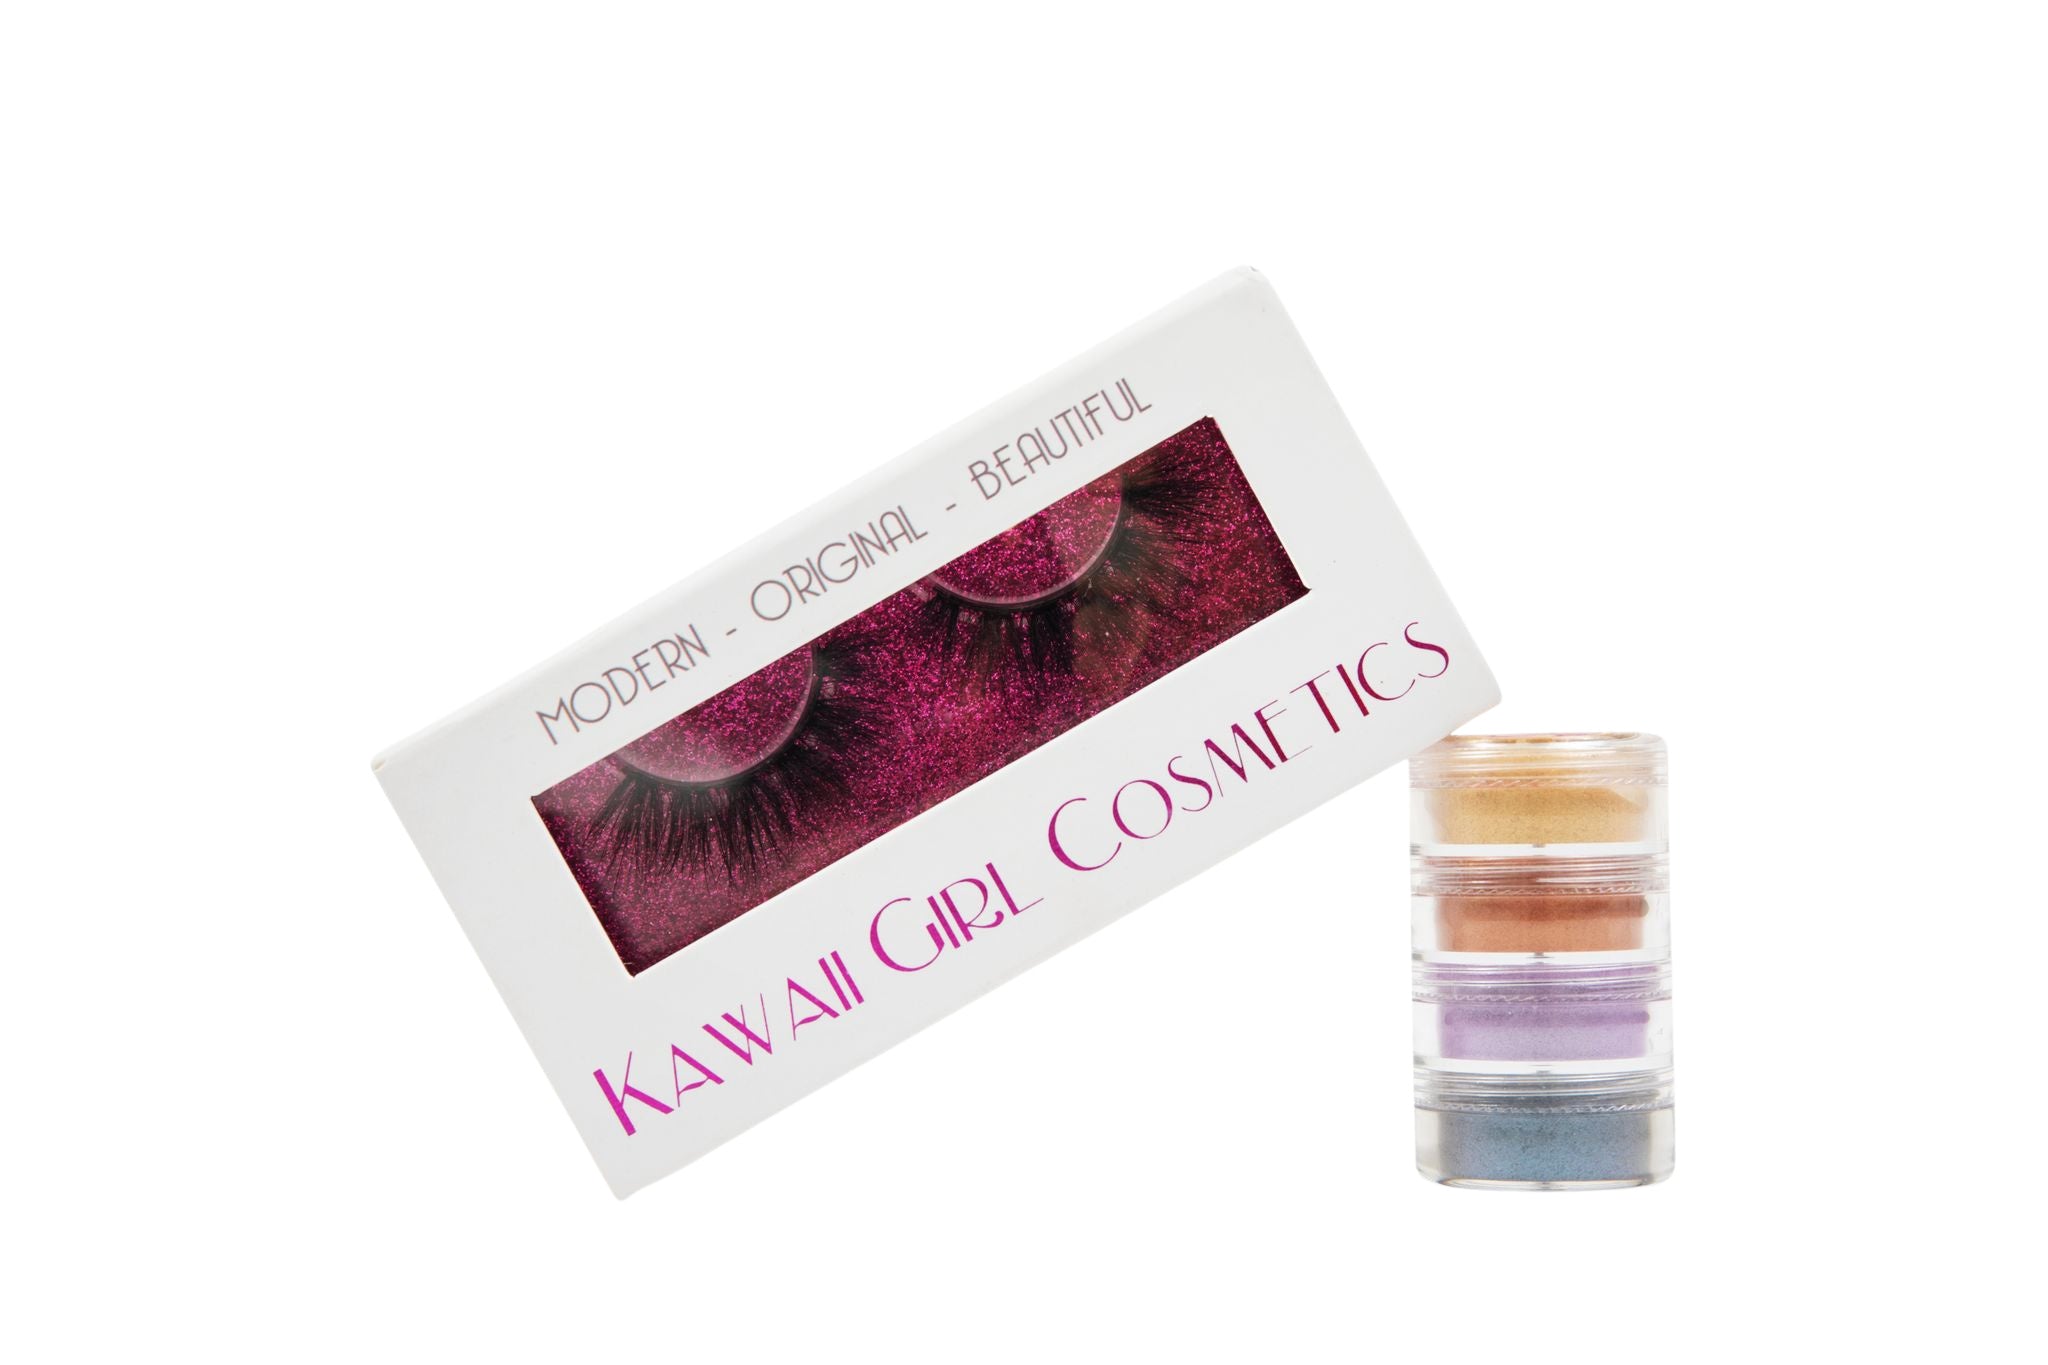 Kawaii Girl Cosmetics The Bronx Borough Kit